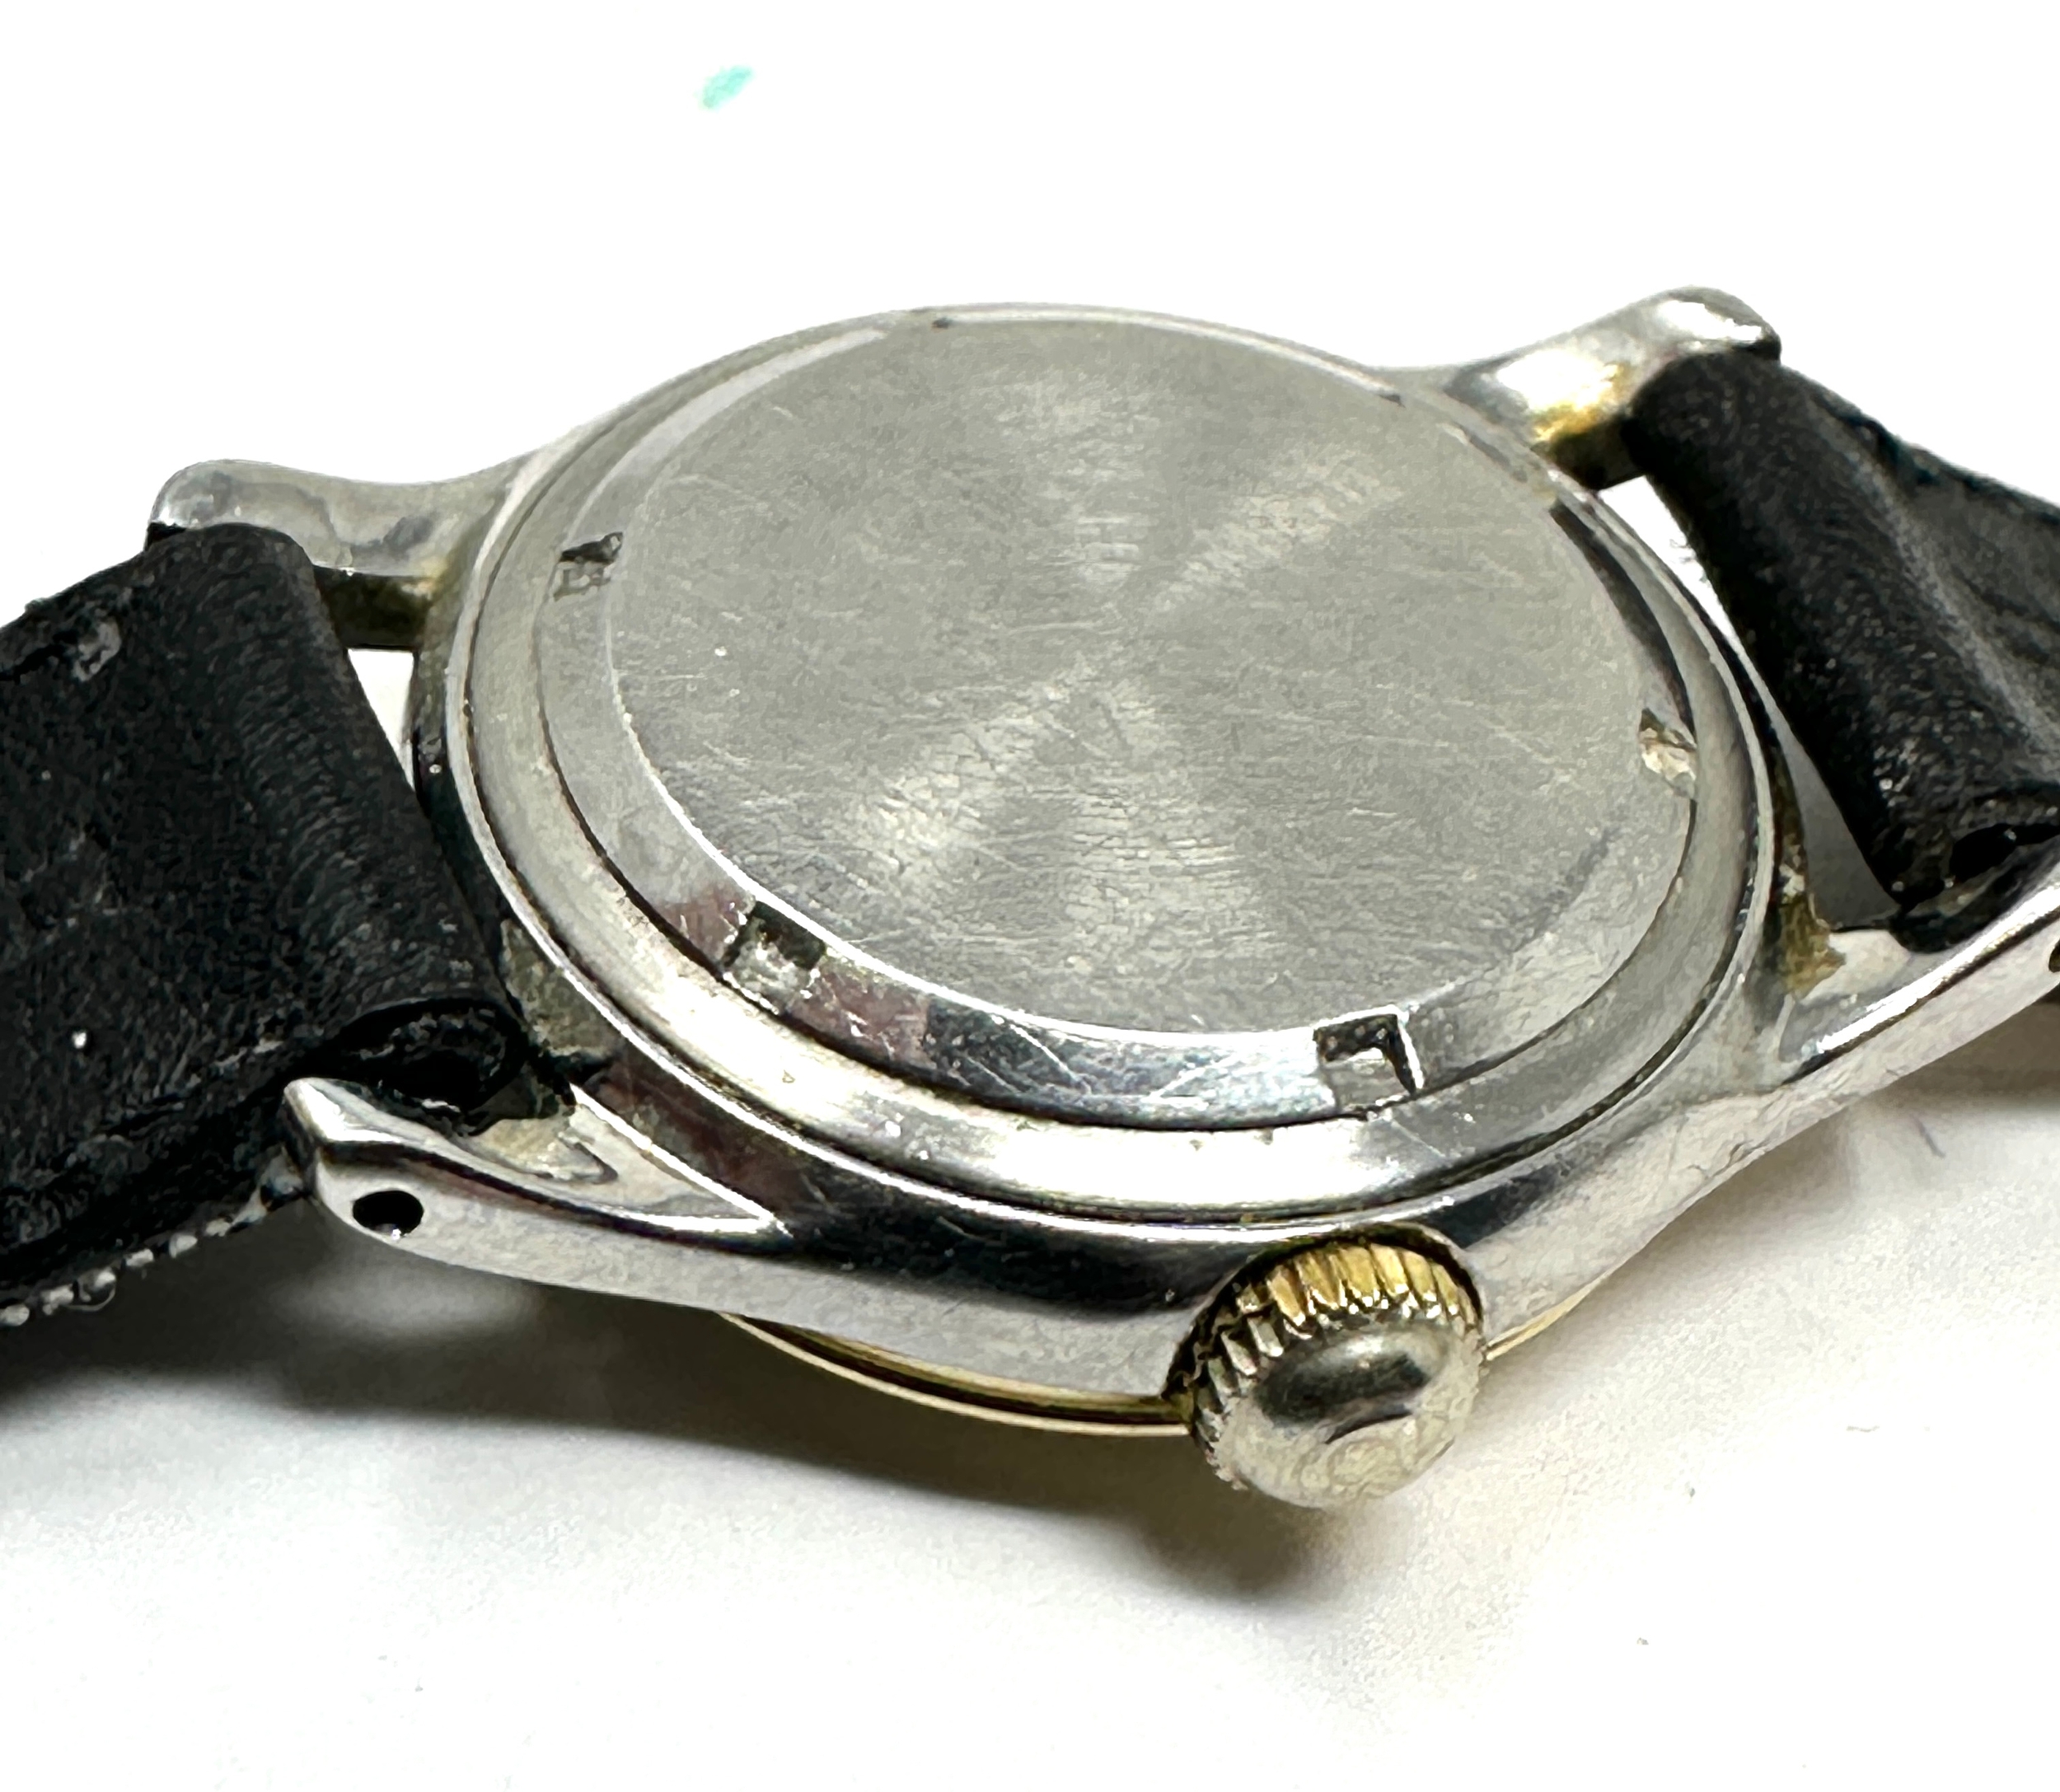 vintage ladies omega wristwatch cal 252 the watch ticks when shaken the winder keeps winding - Image 6 of 6